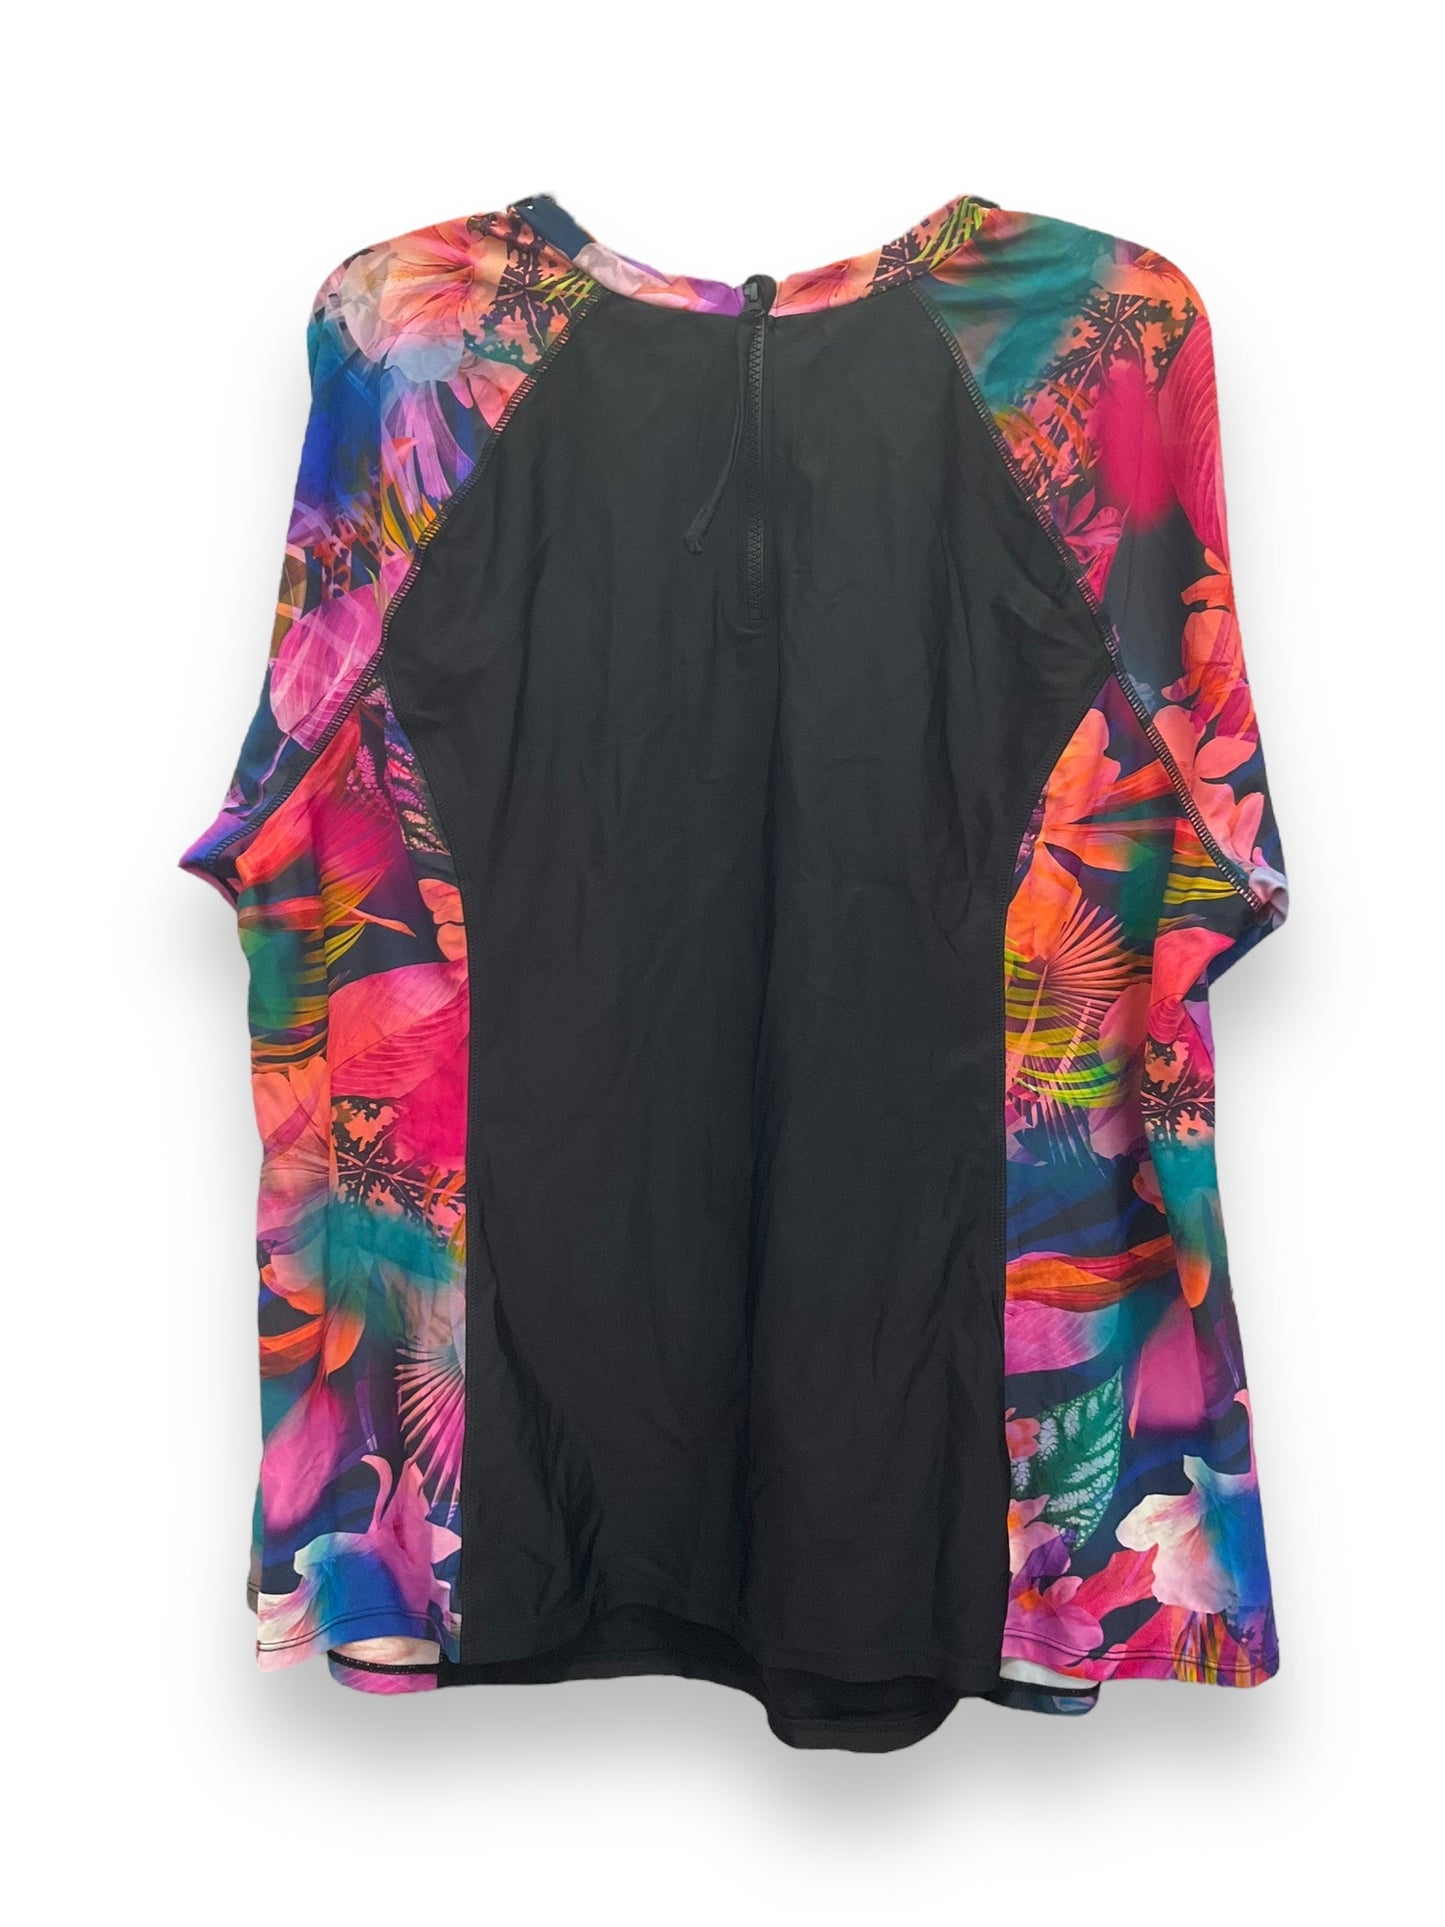 Tropical Print Swimsuit Top Torrid, Size 4x